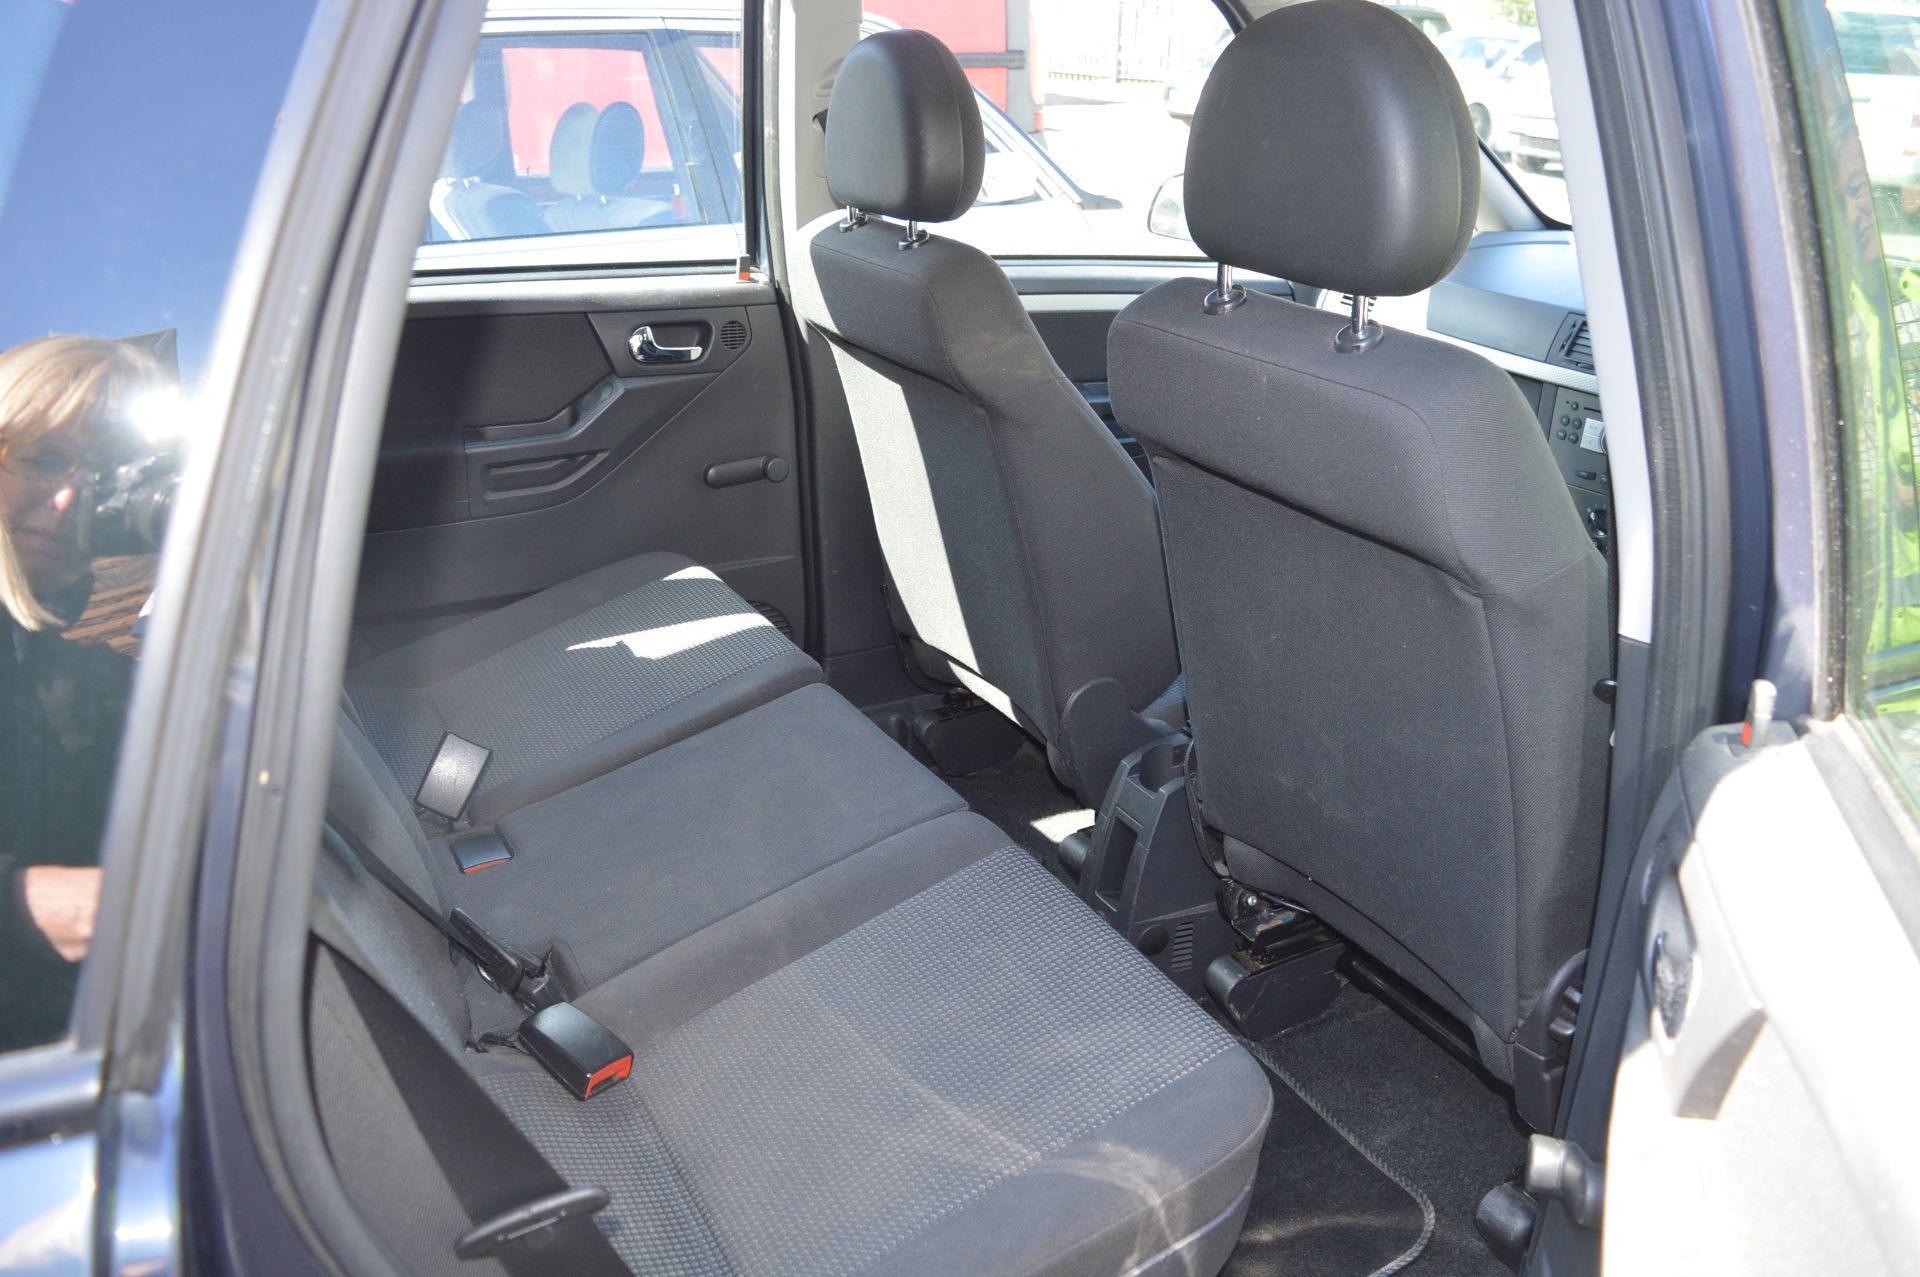 Vauxhall Meriva Reg: DV10 JUY - Image 5 of 5